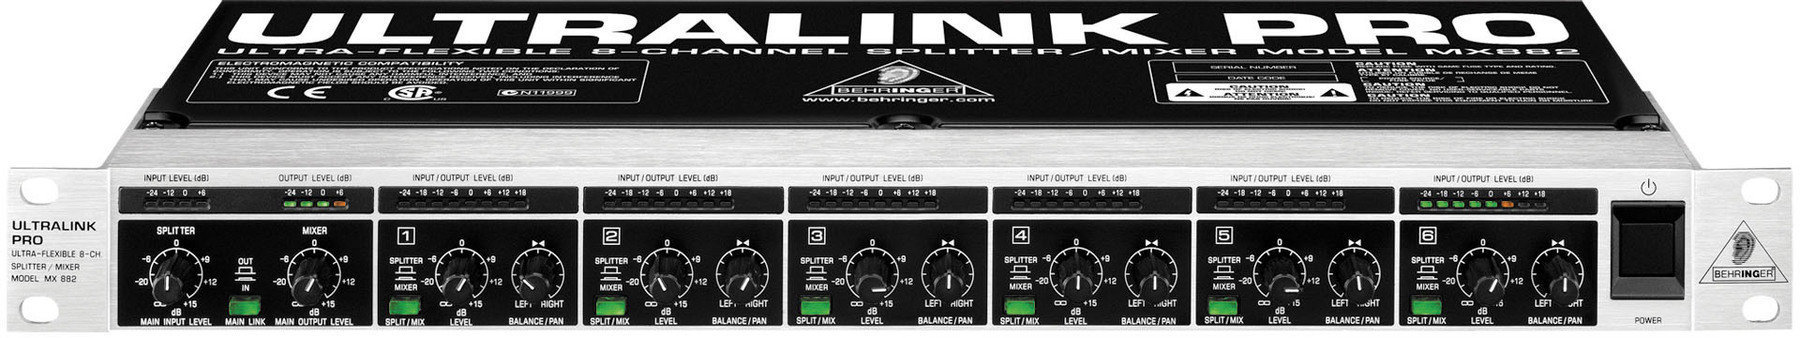 Rackový mixpult Behringer MX 882 ULTRALINK PRO